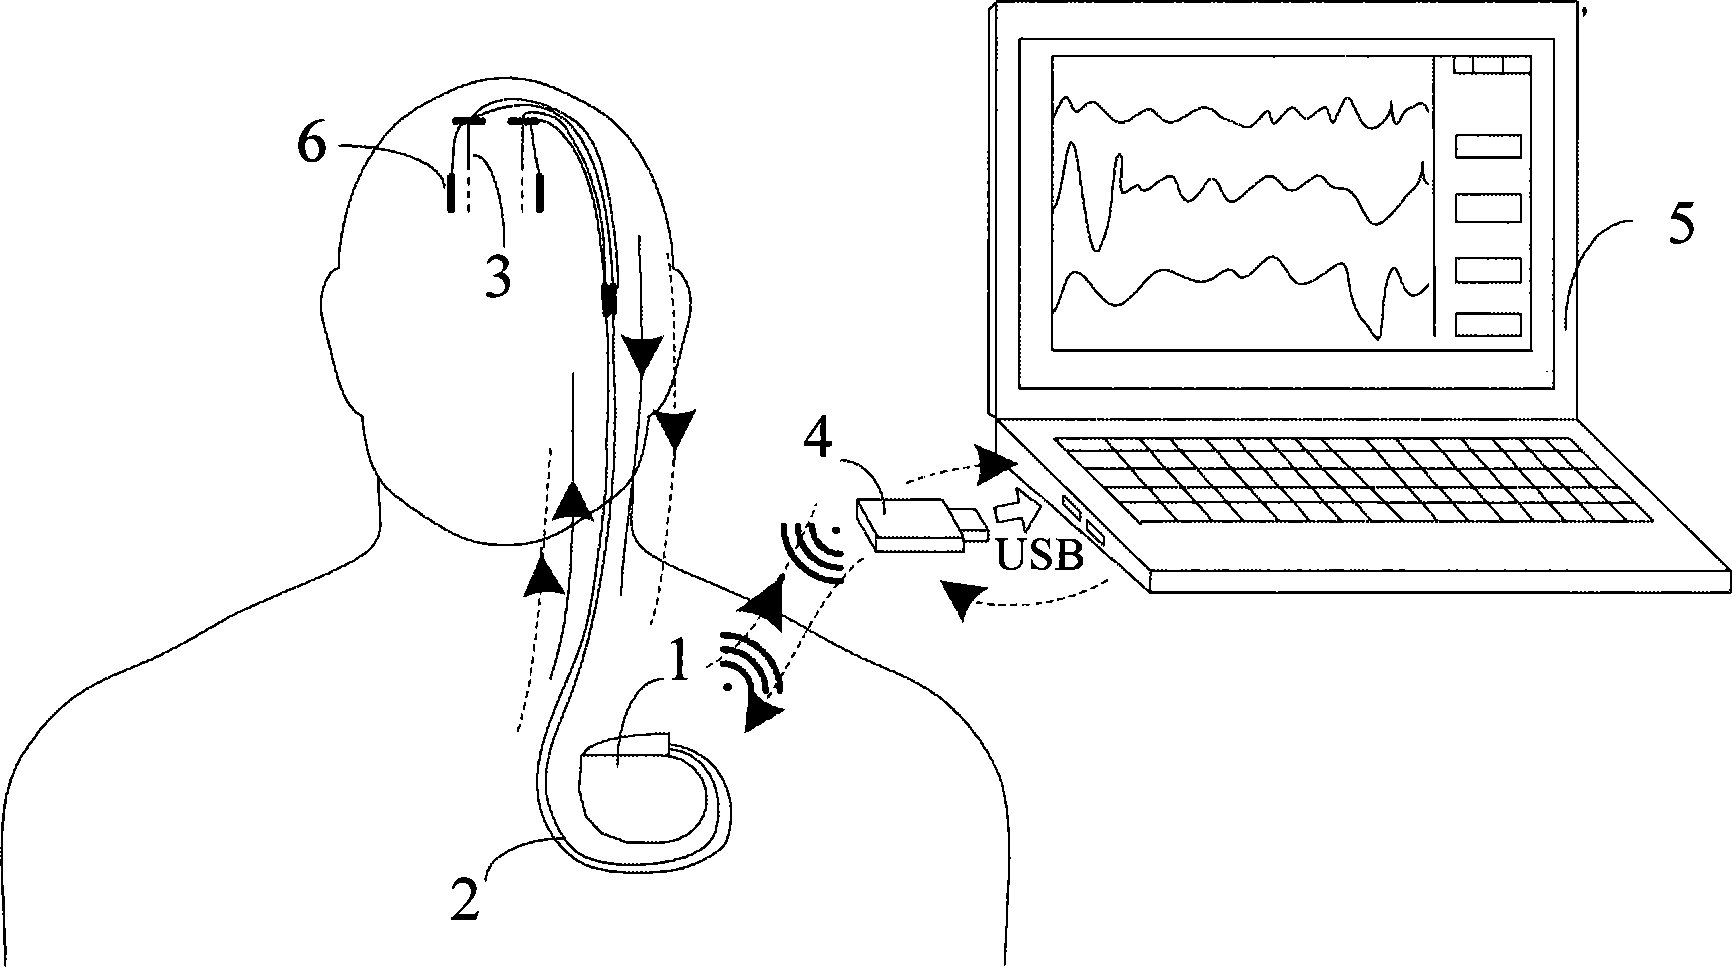 Closed loop nerve stimulation system